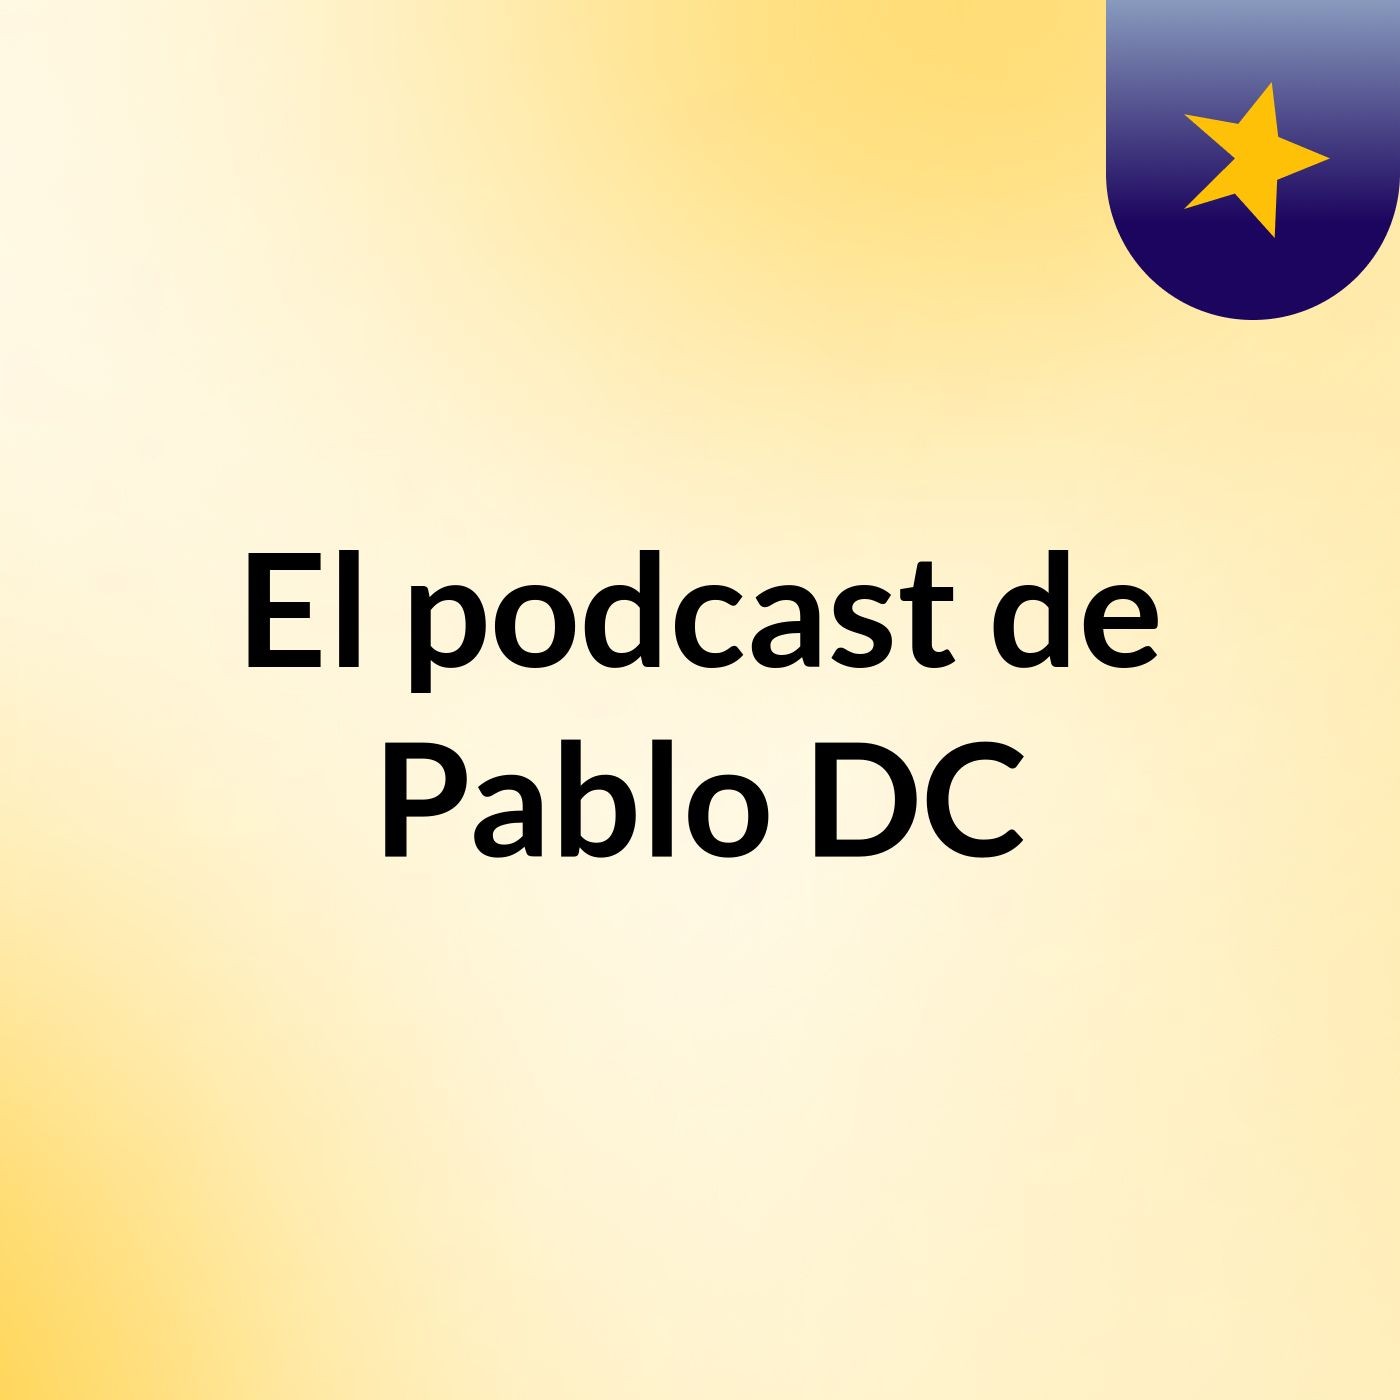 El podcast de Pablo DC